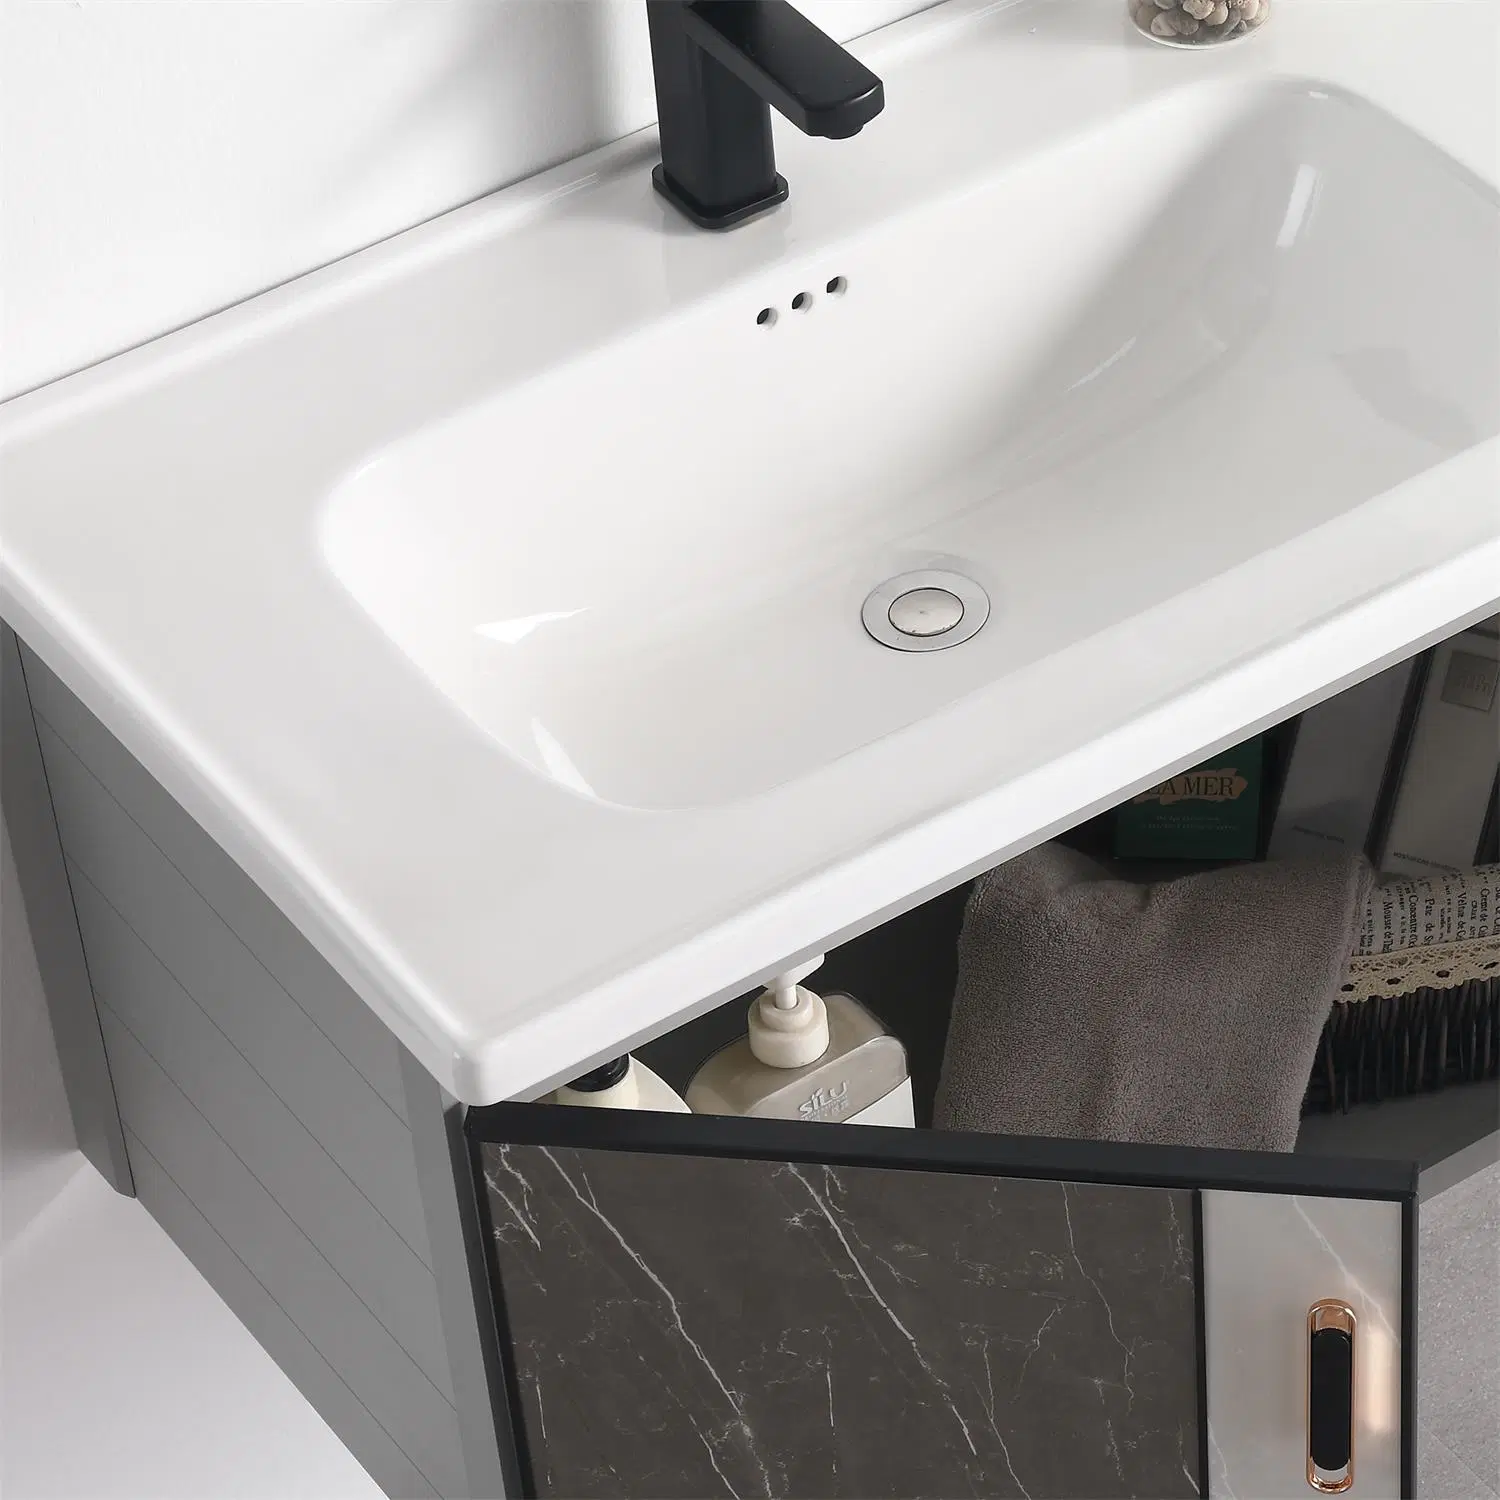 Modern Furniture Wholesale/Supplier Bathroom Vanities Double Drawers Bathroom Storage Cabinet with Basin Sink